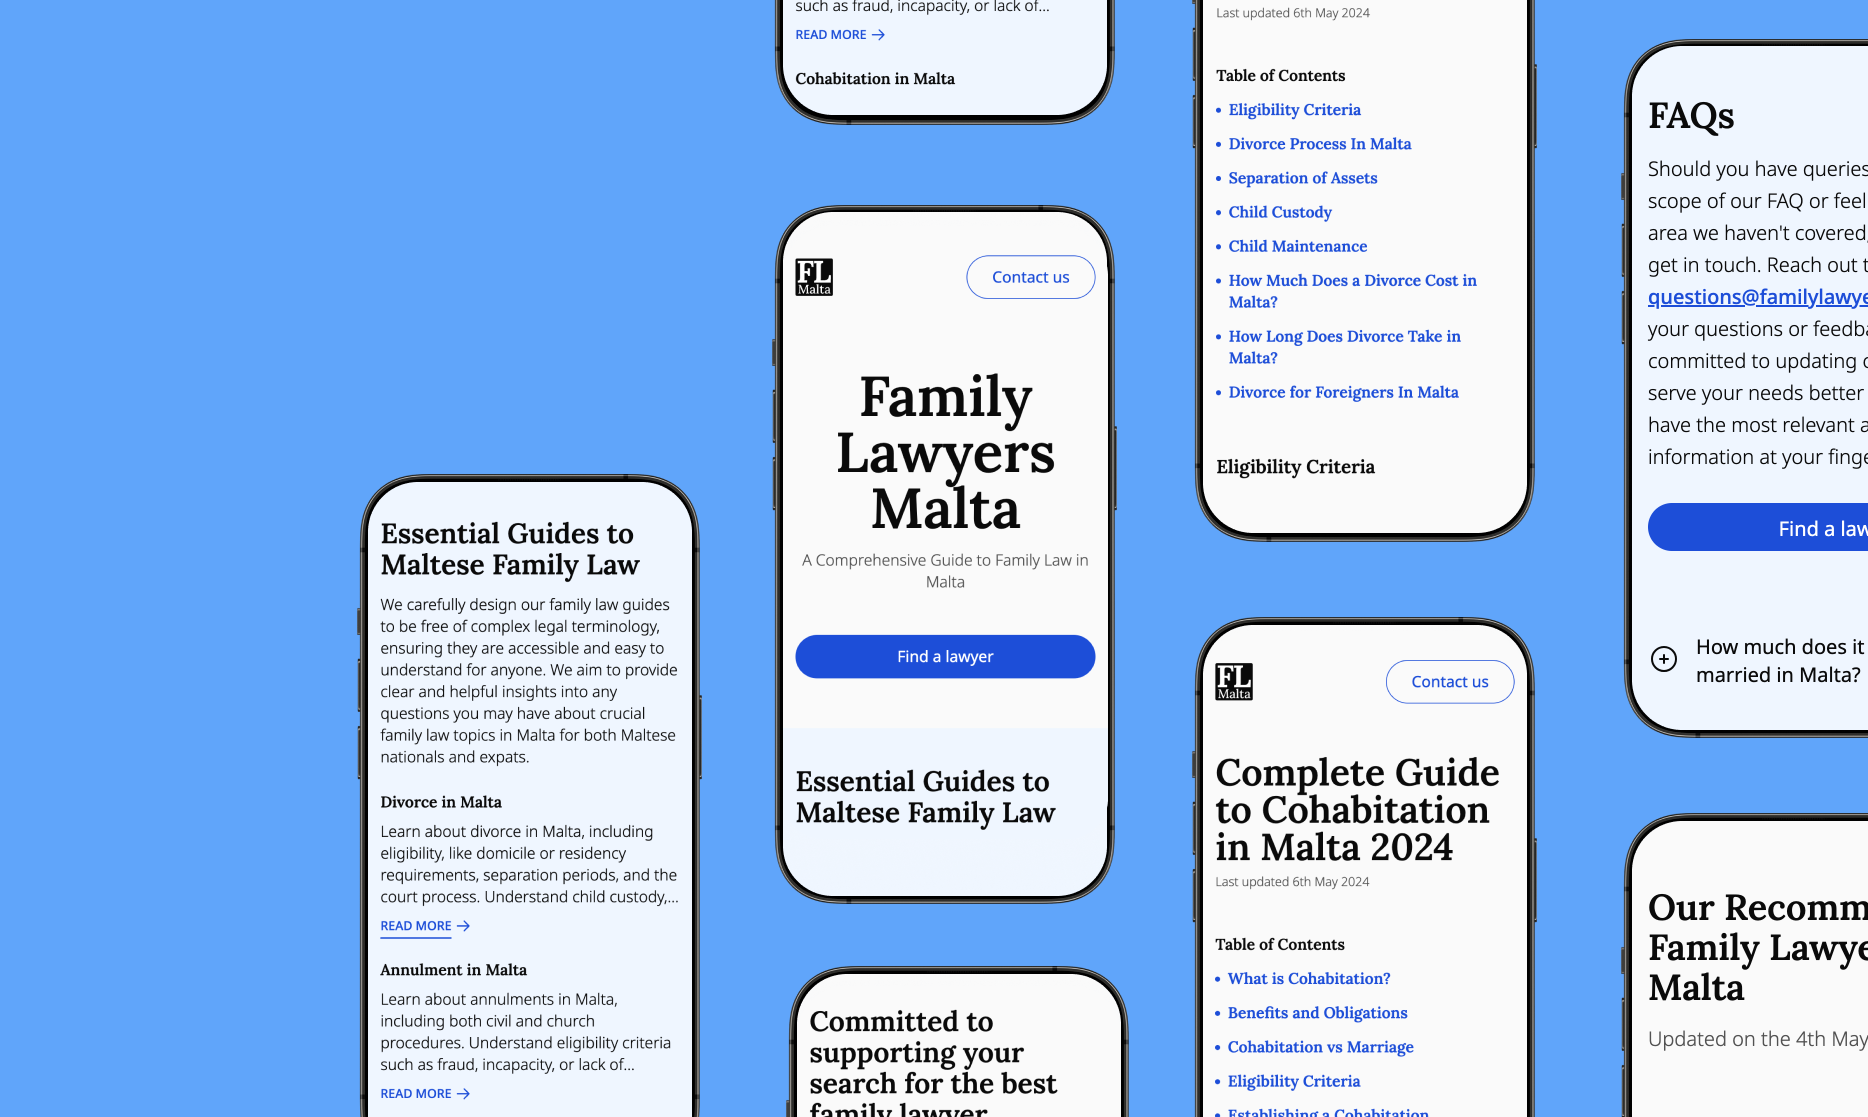 Family Lawyers Malta product image slide